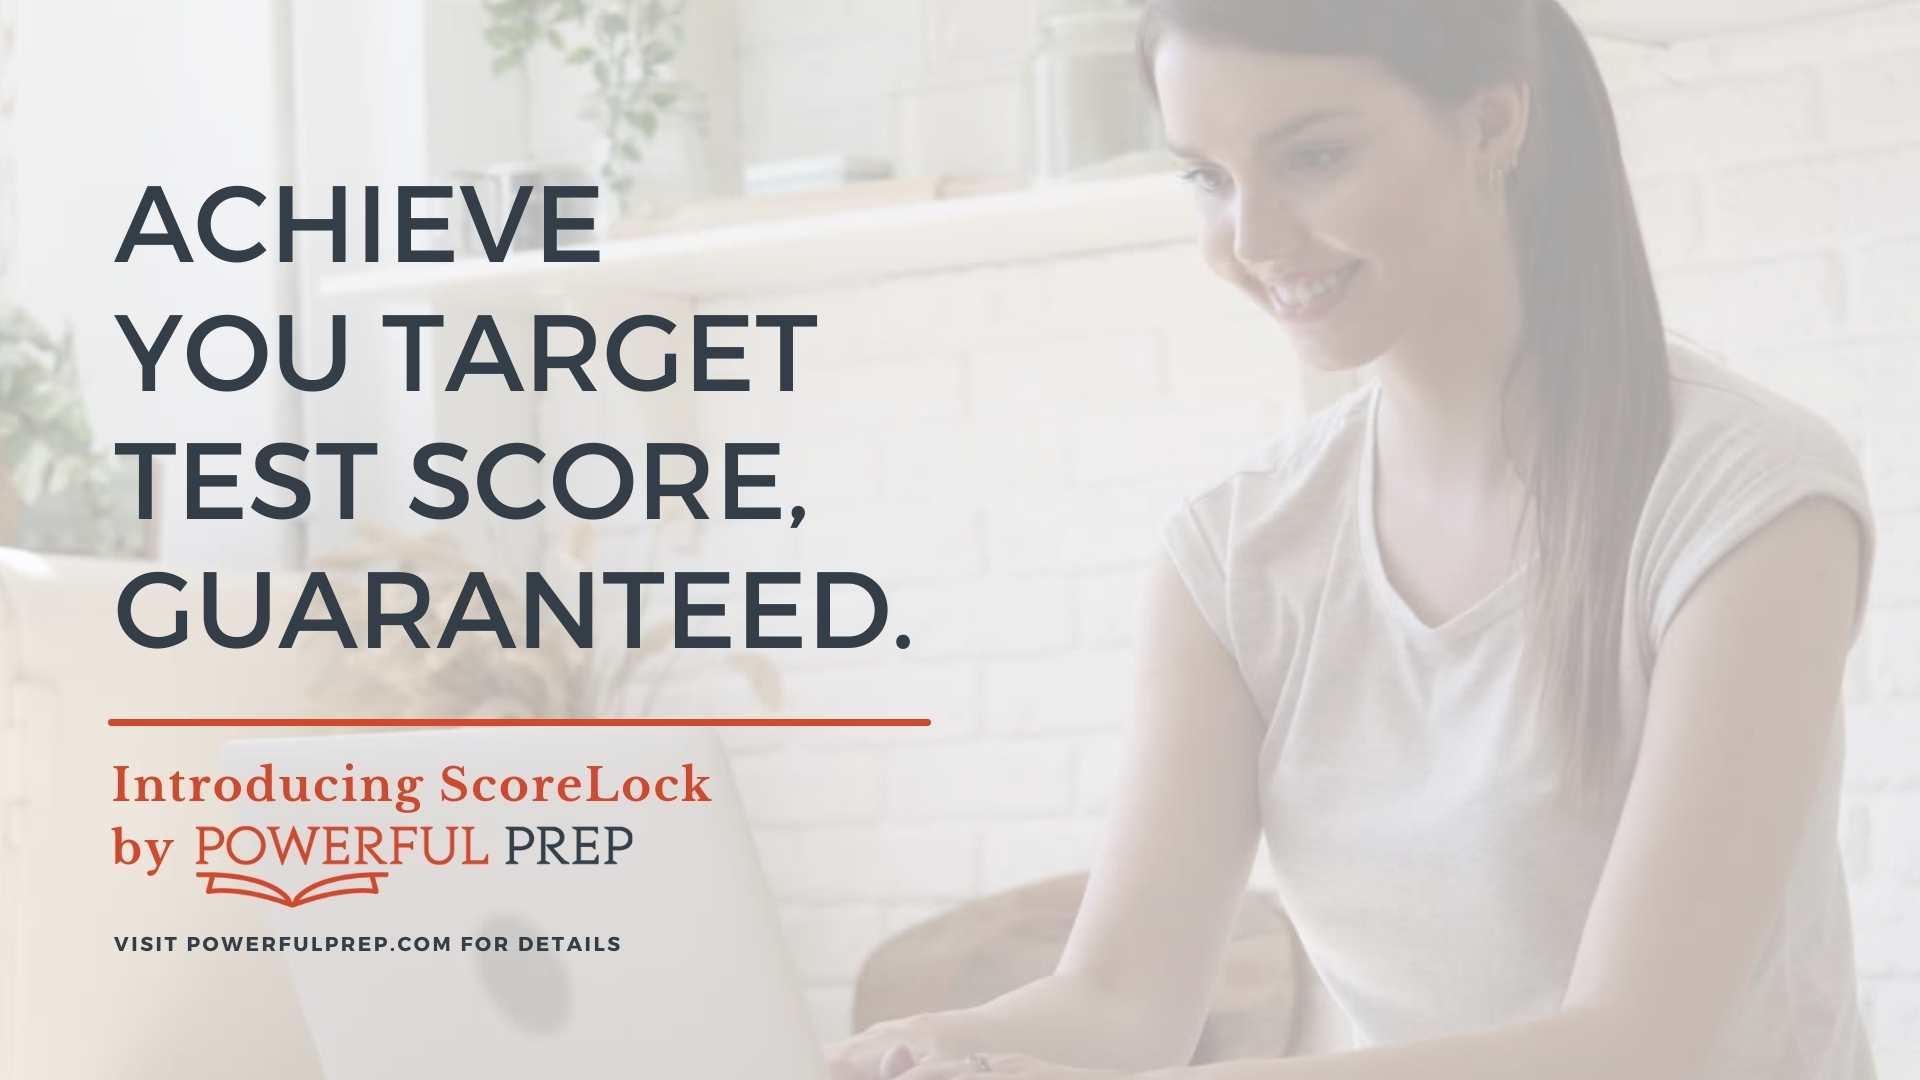 ScoreLock SAT test score guarantee powerful prep